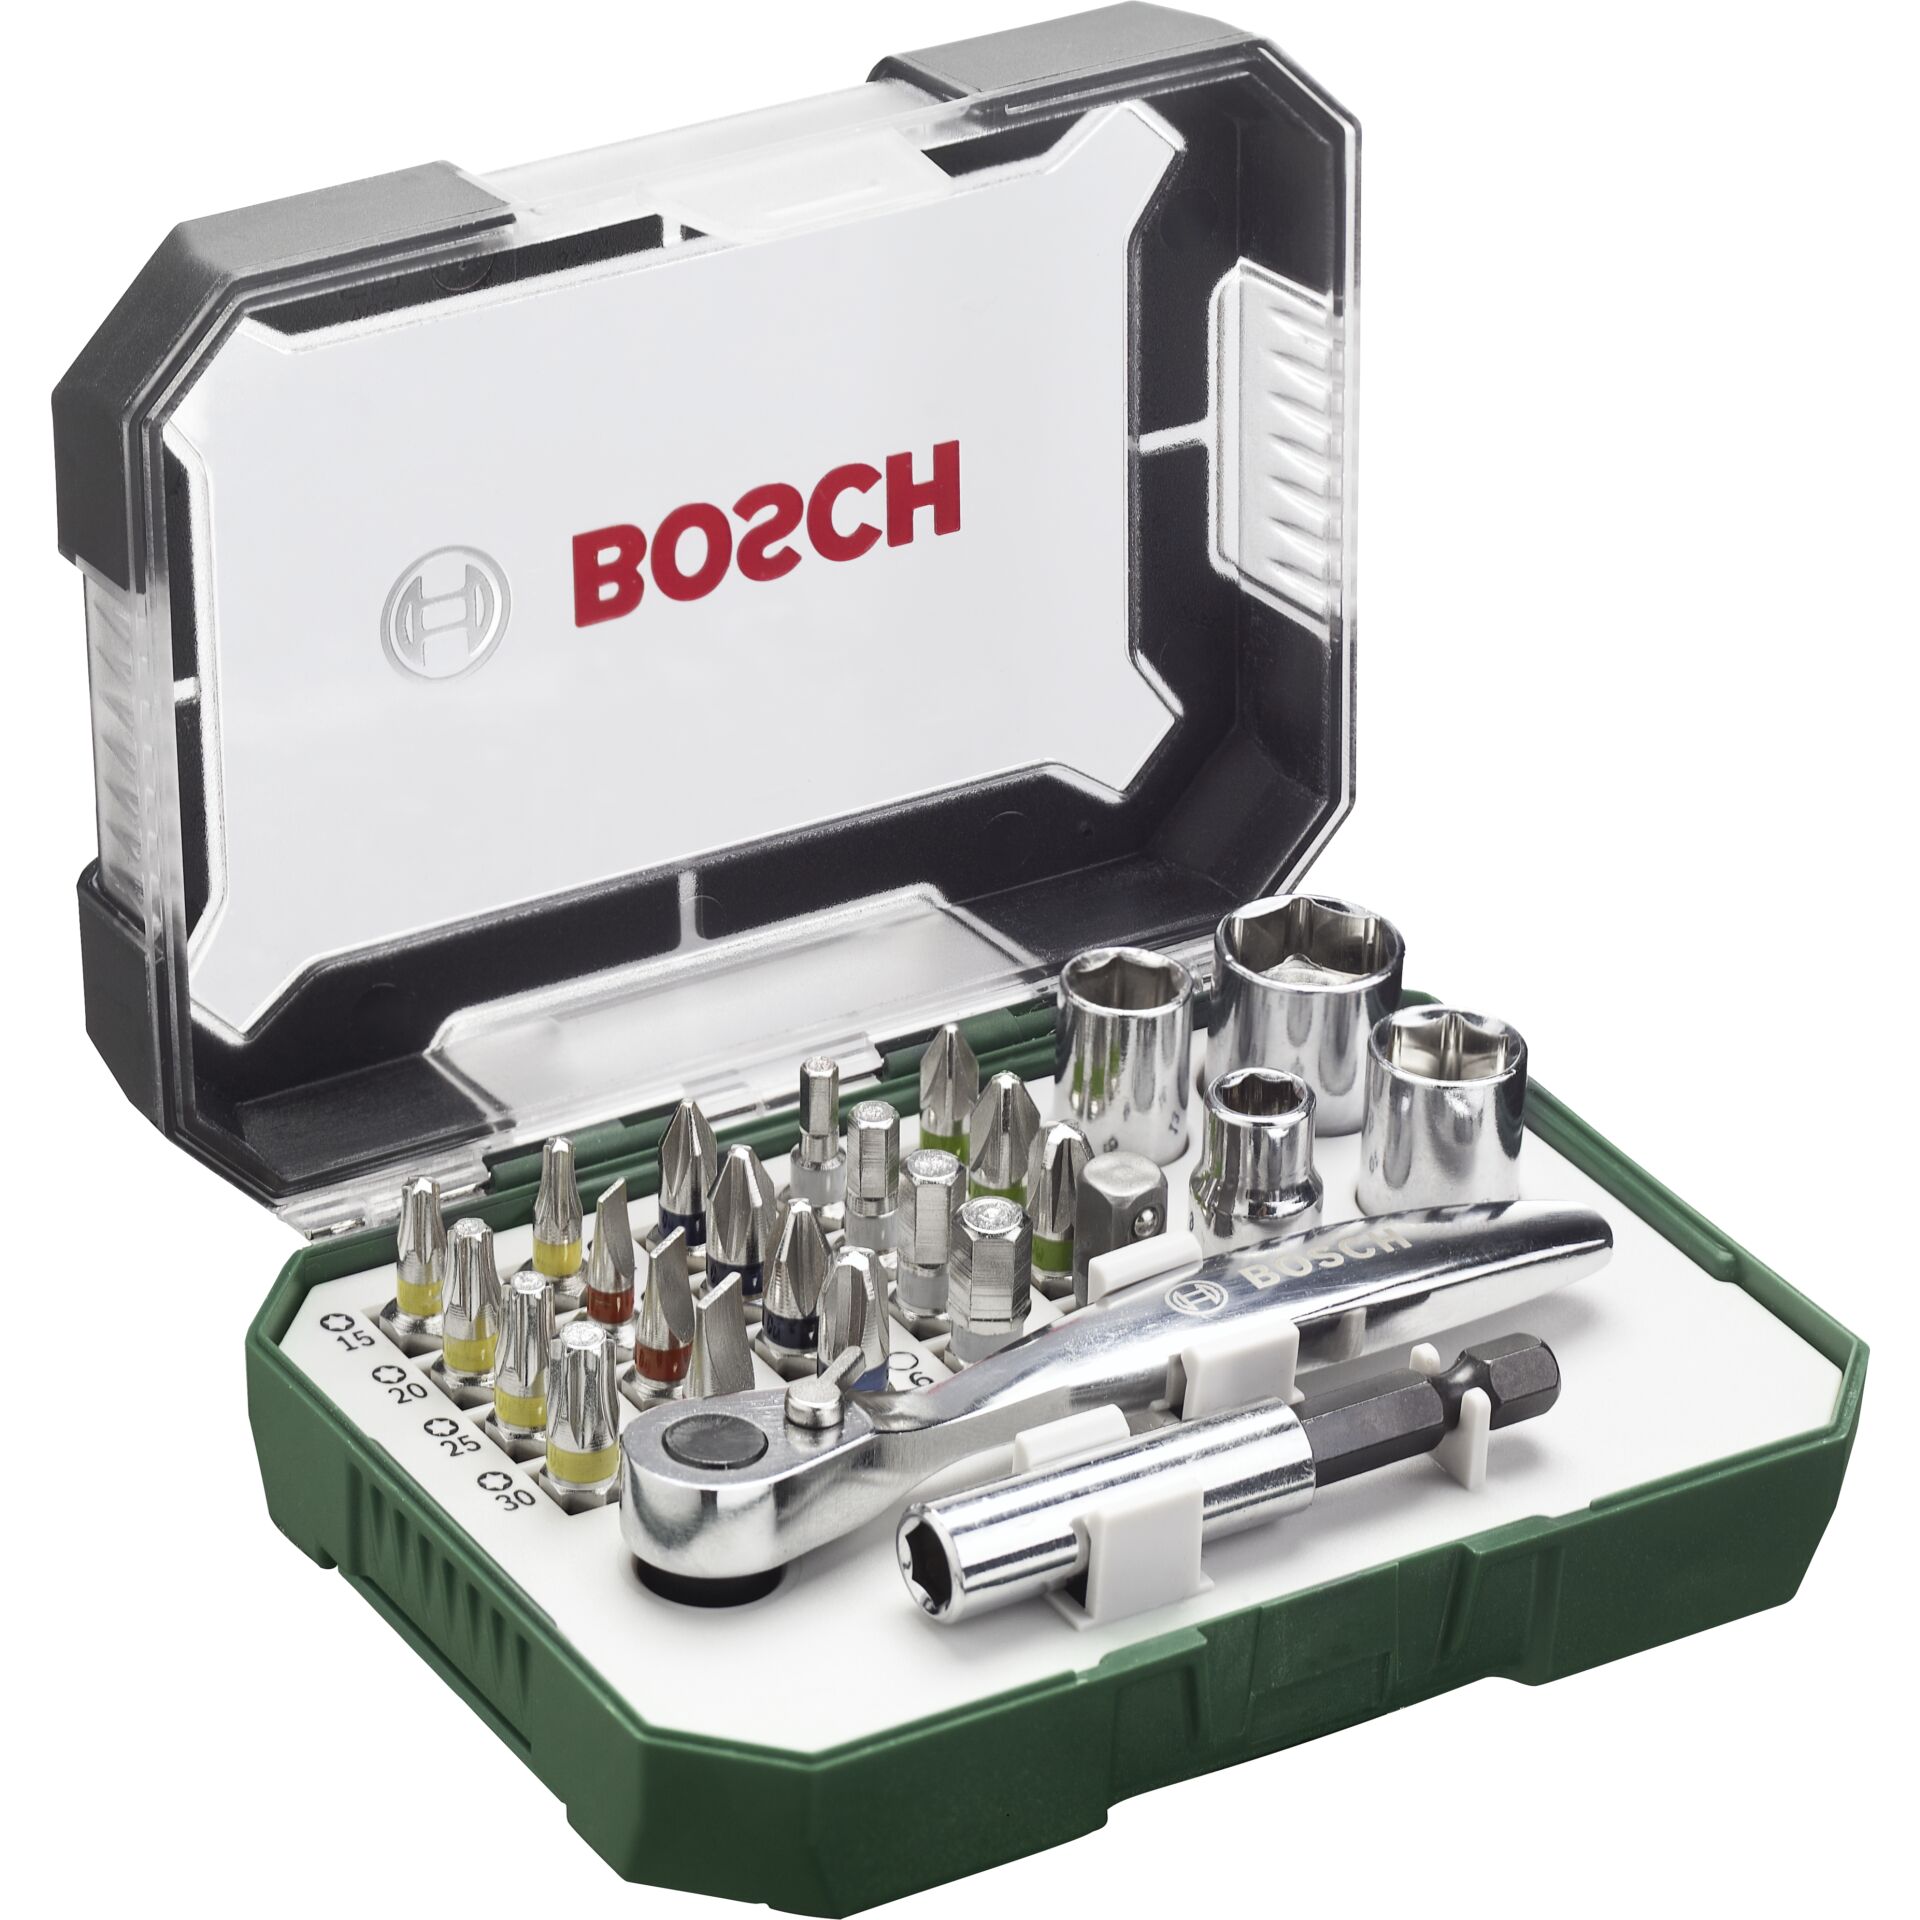 Bosch Prom 26-pcs. Screwdriver Bit Set with Ratchet